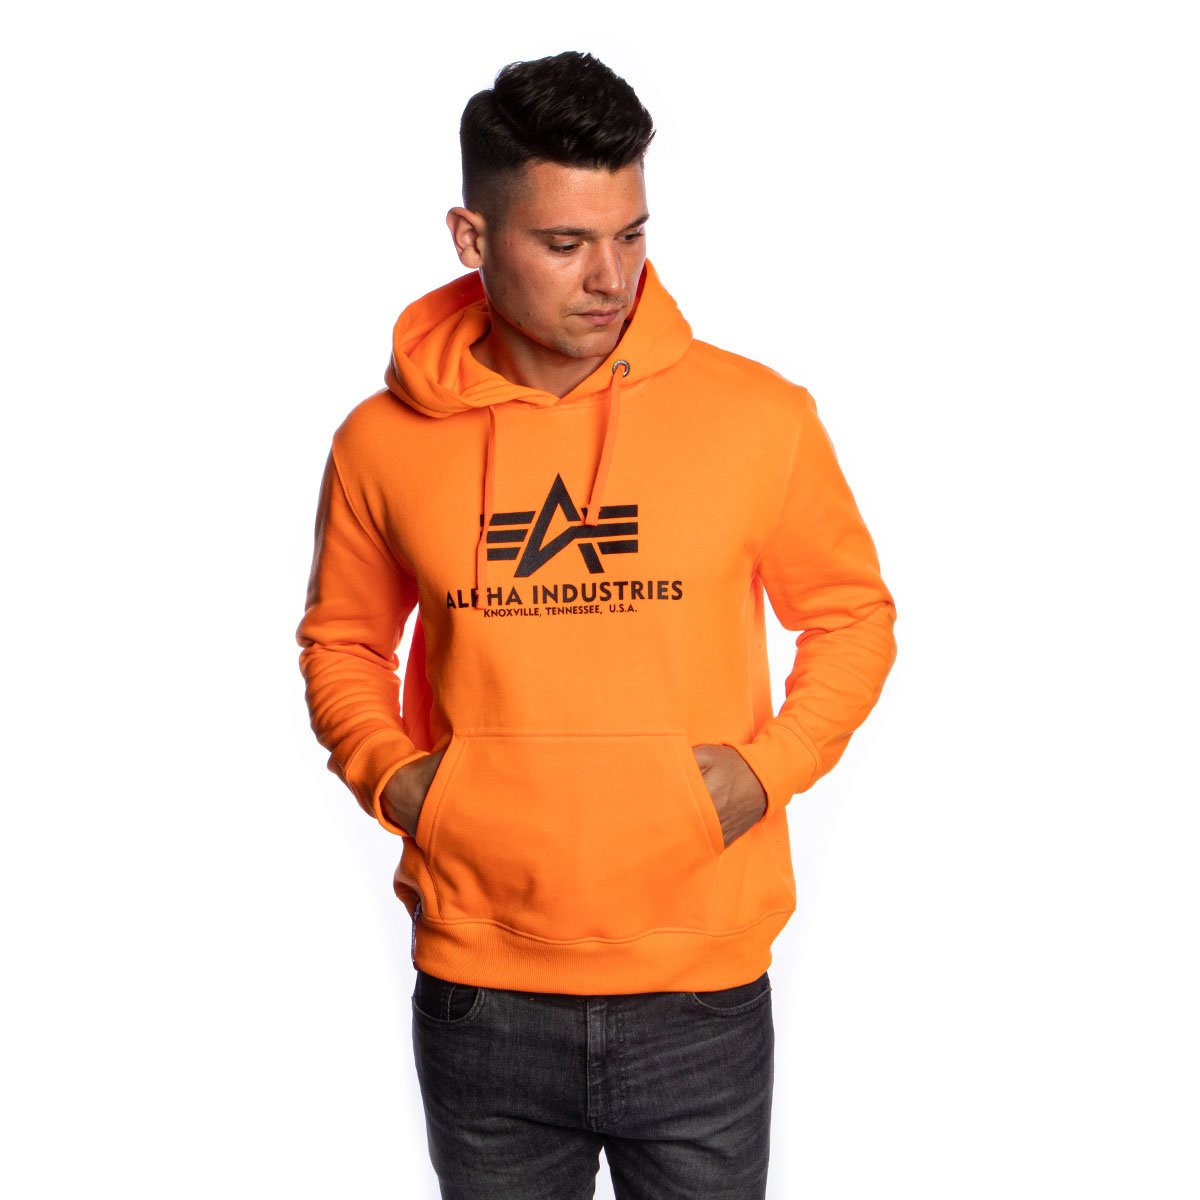 Hoody Sweatshirt Industries neon/orange Alpha Neon Basic